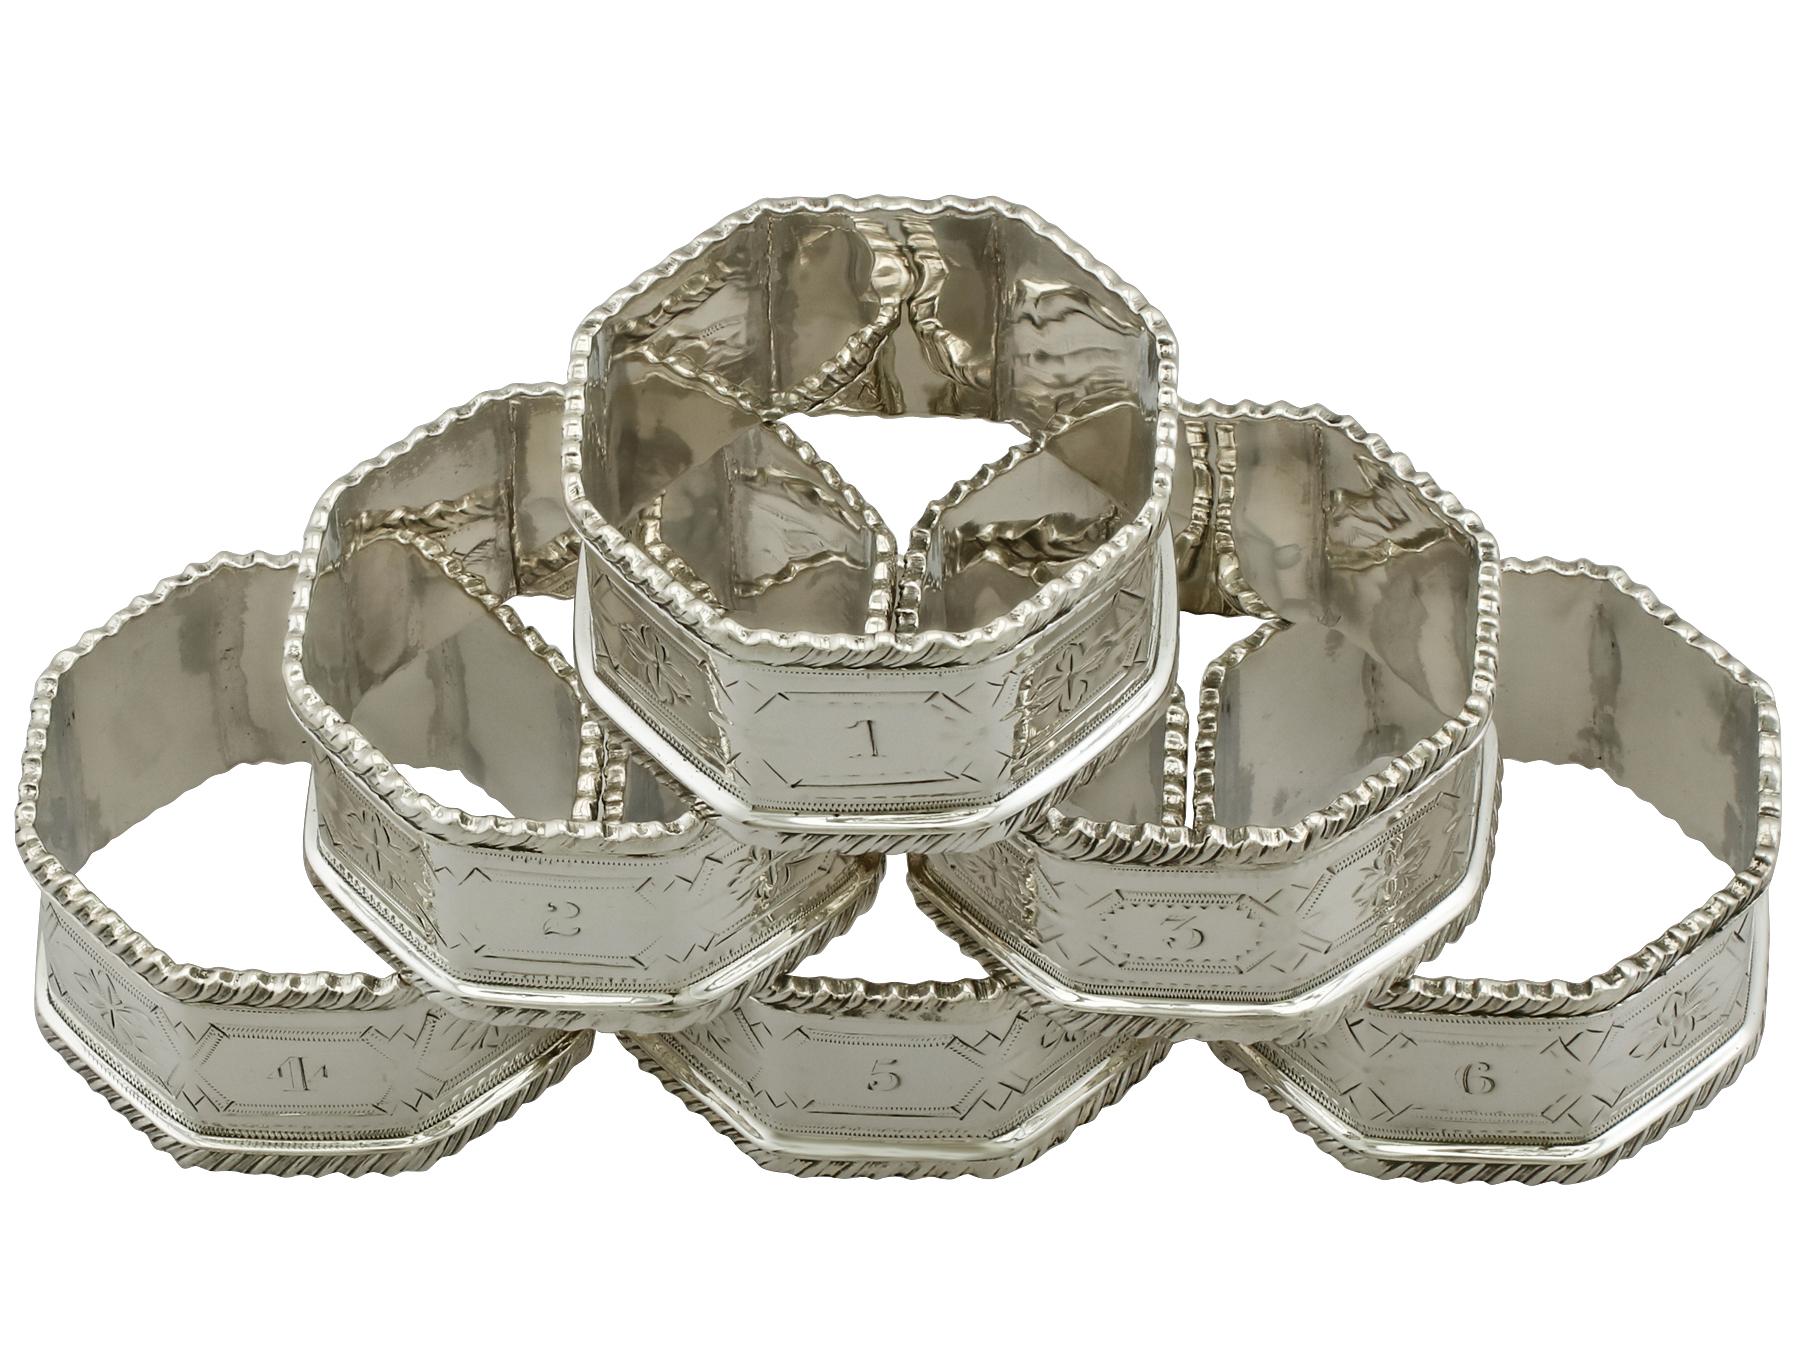 British Antique Edwardian Sterling Silver Napkin Rings, 1902